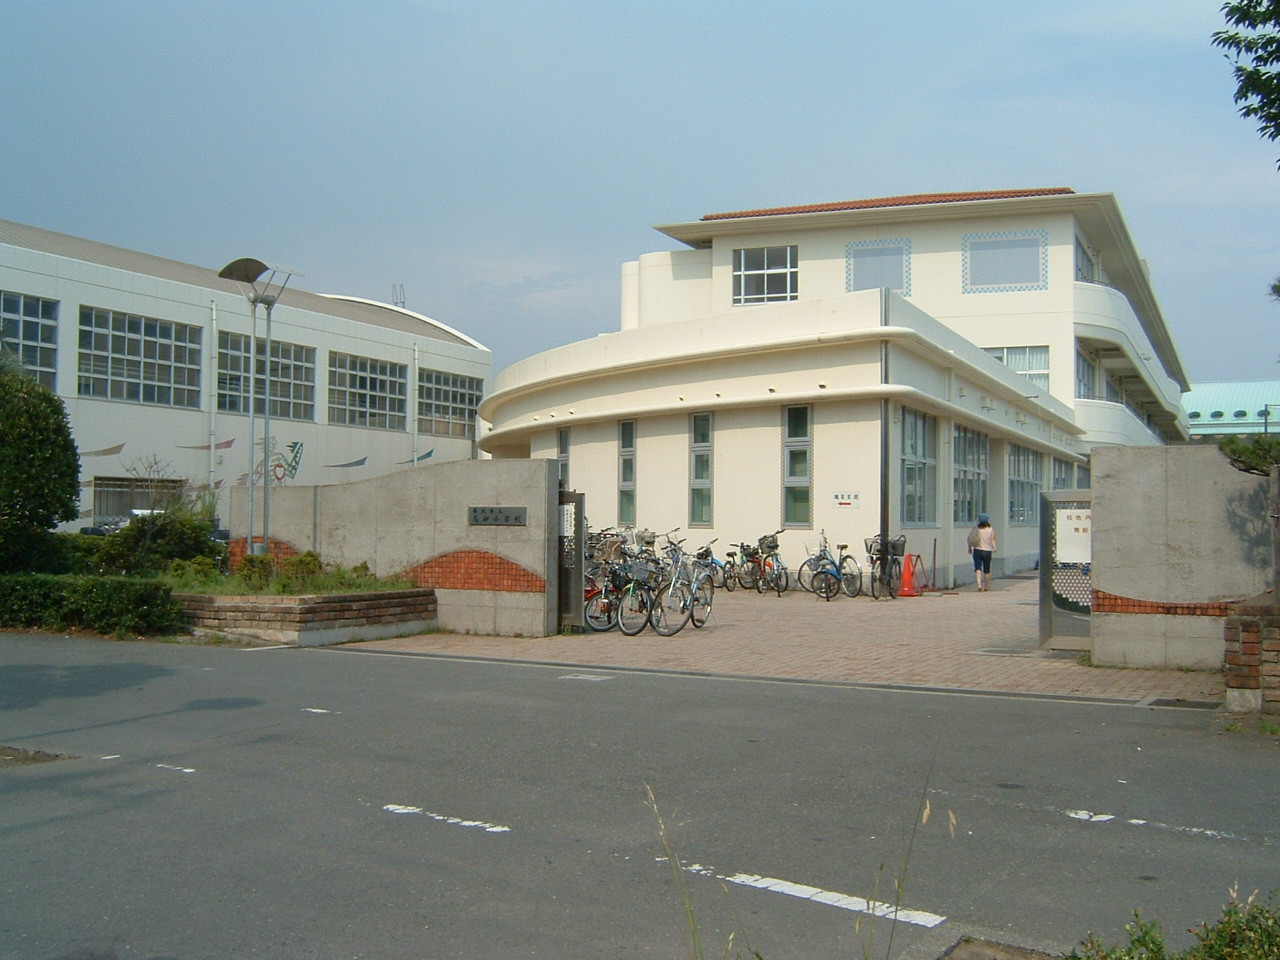 Primary school. Takasago to elementary school (elementary school) 825m